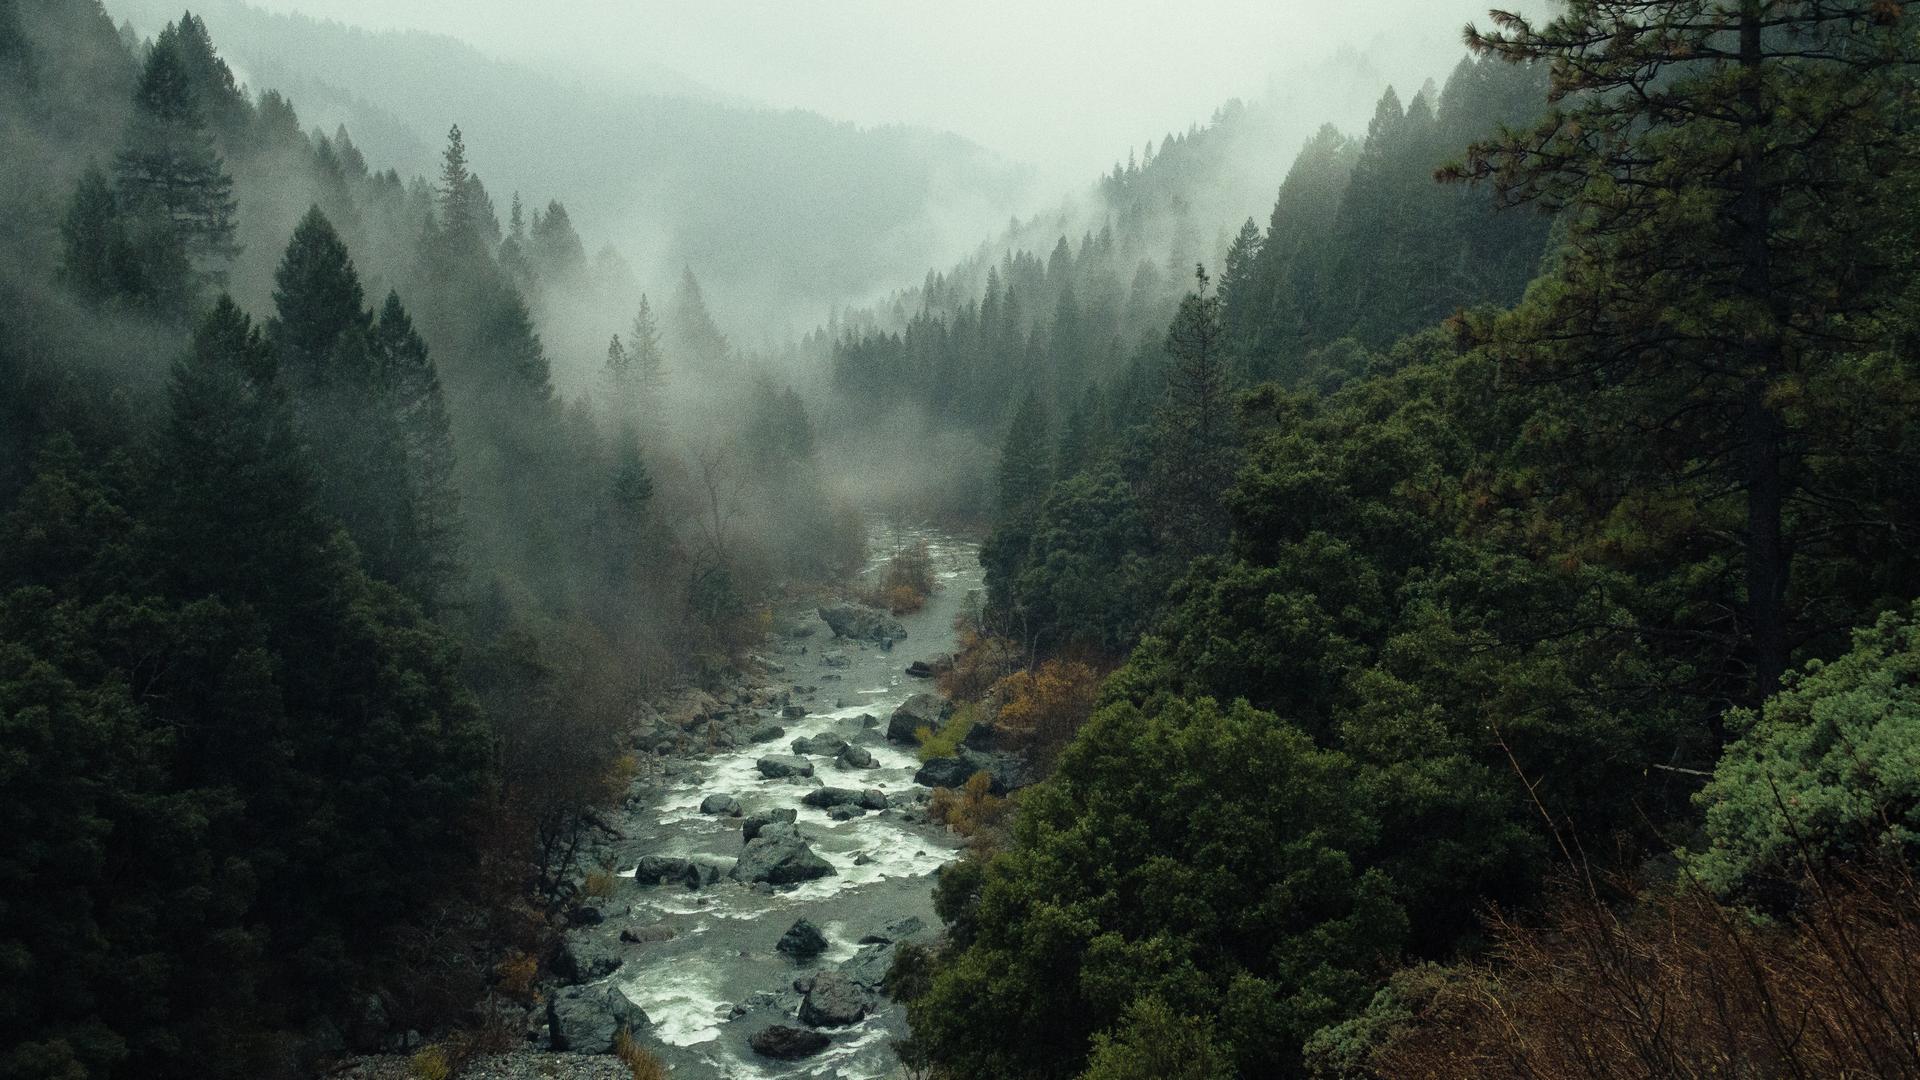 Eine im Nebel versunkene Wald-Berglandschaft